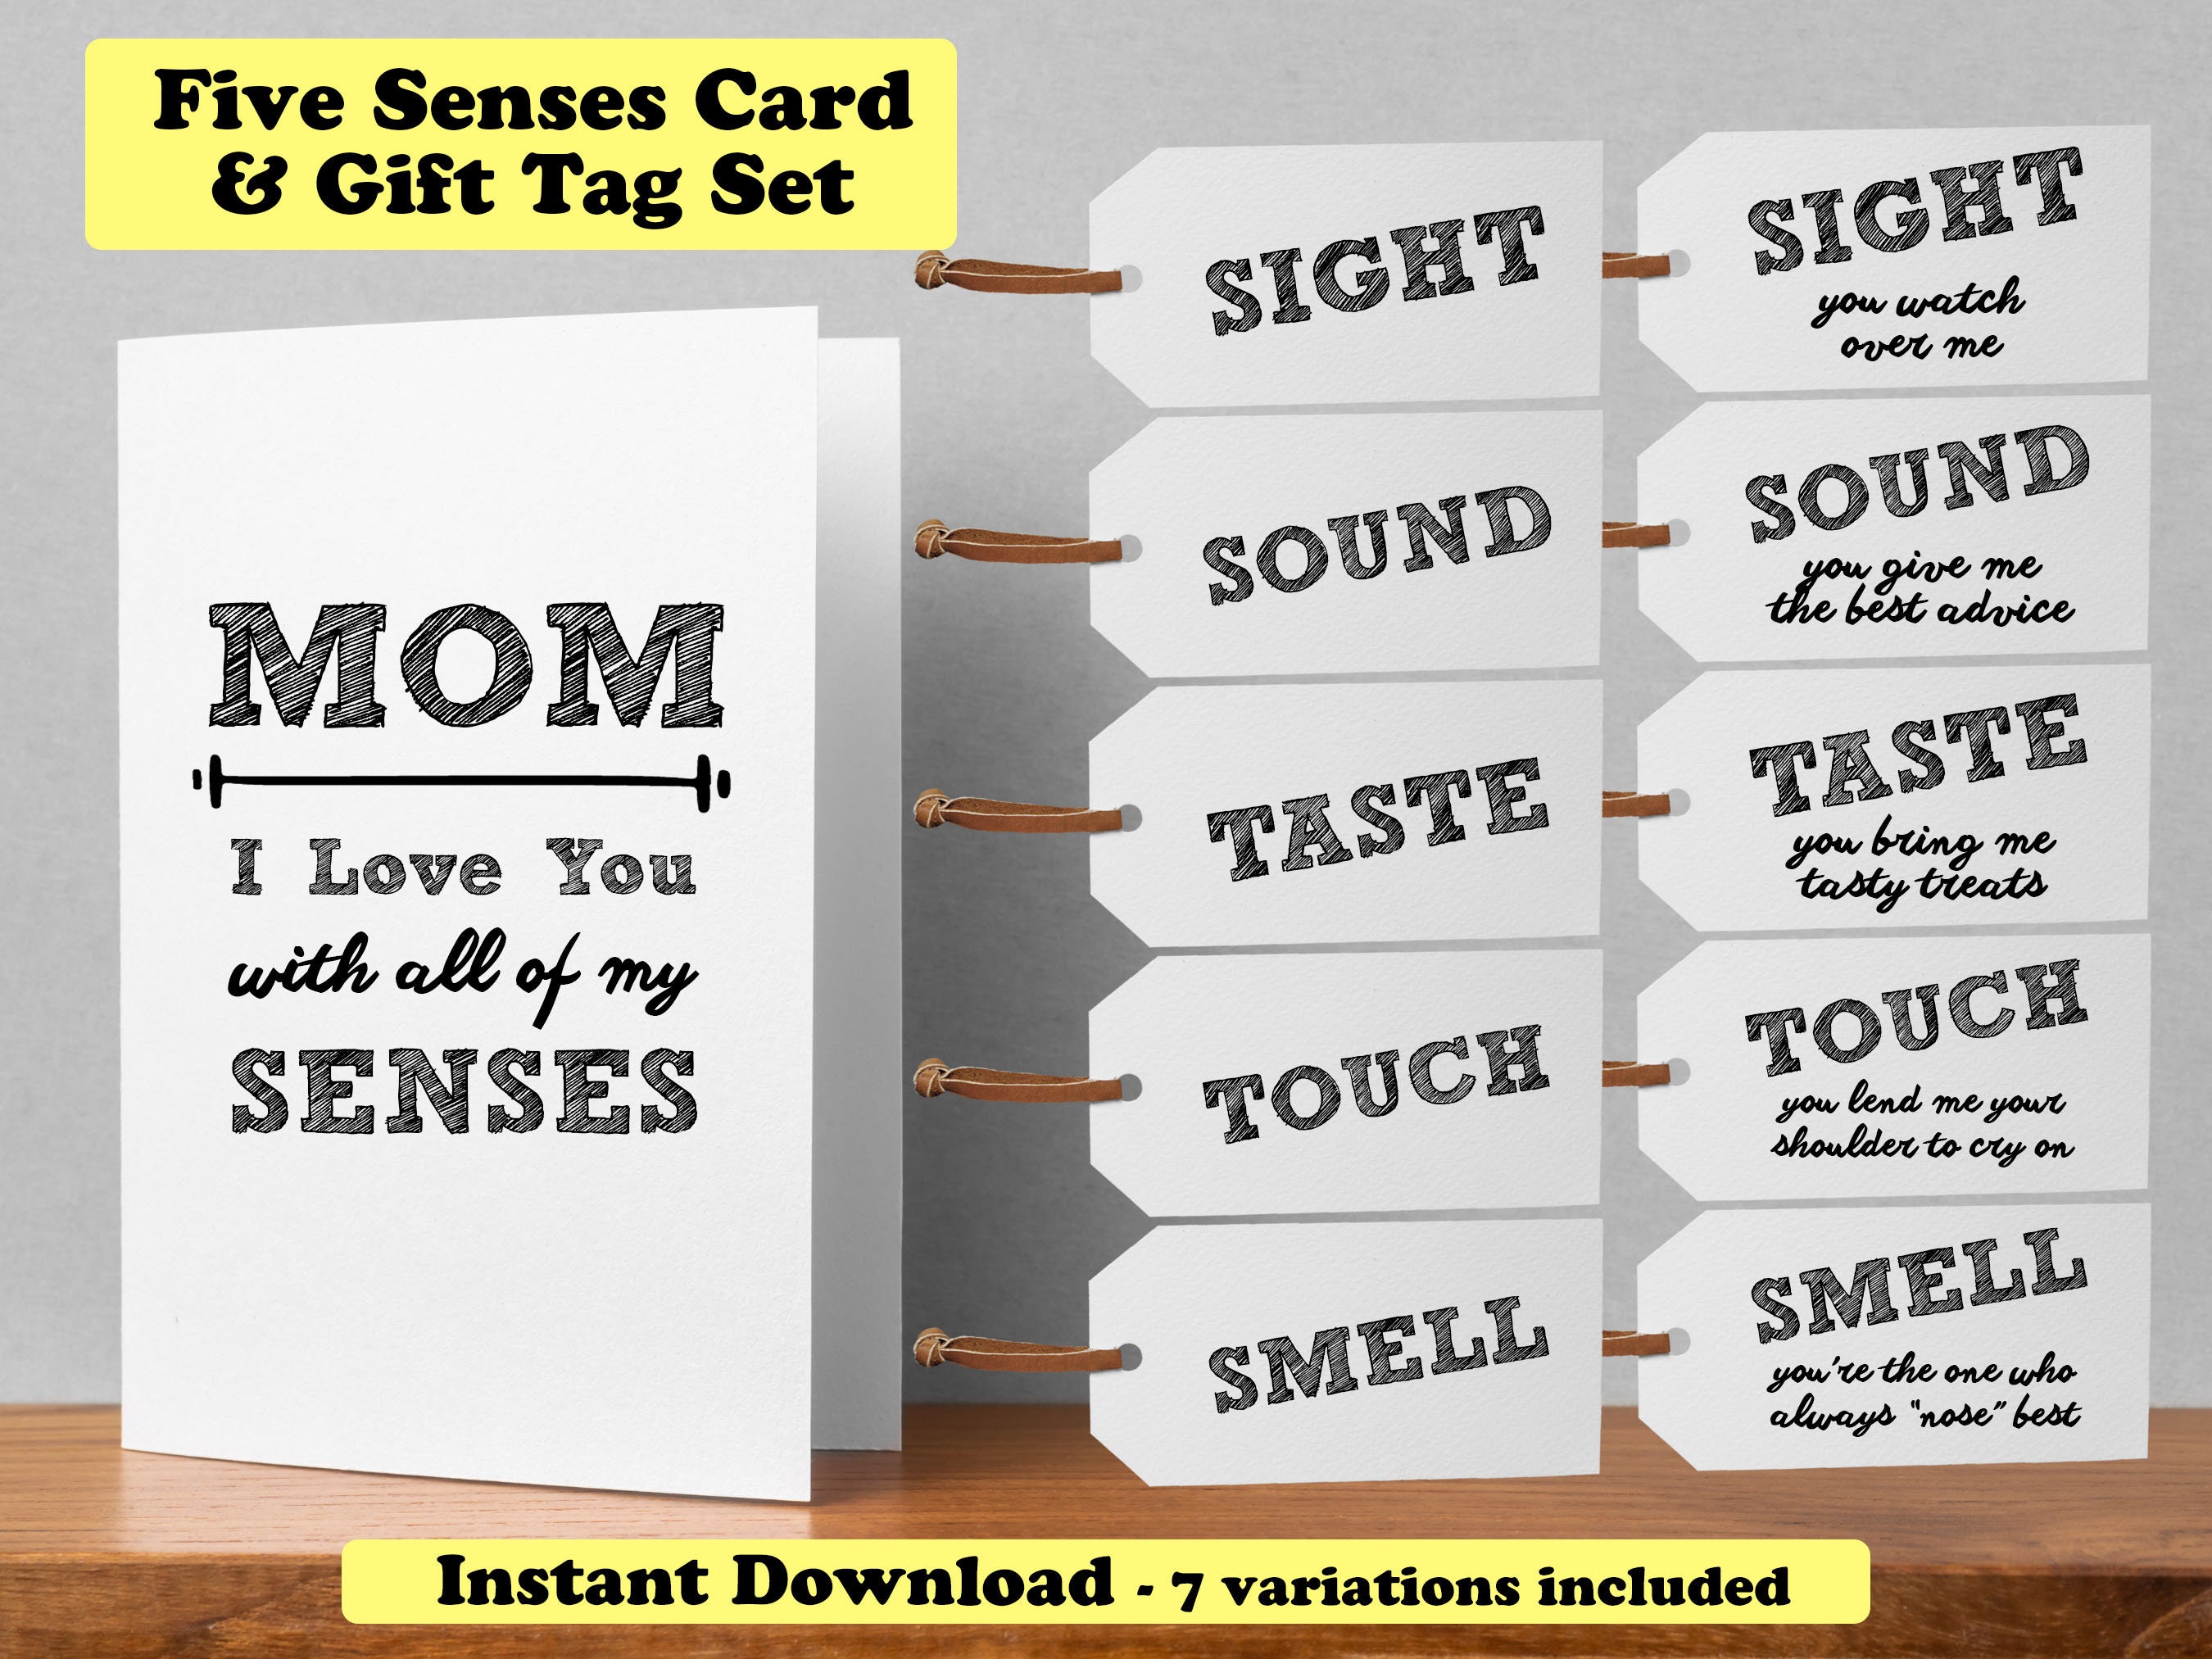 5 Senses Gift for Him, Christmas Gift Idea, Instant Download, Gift